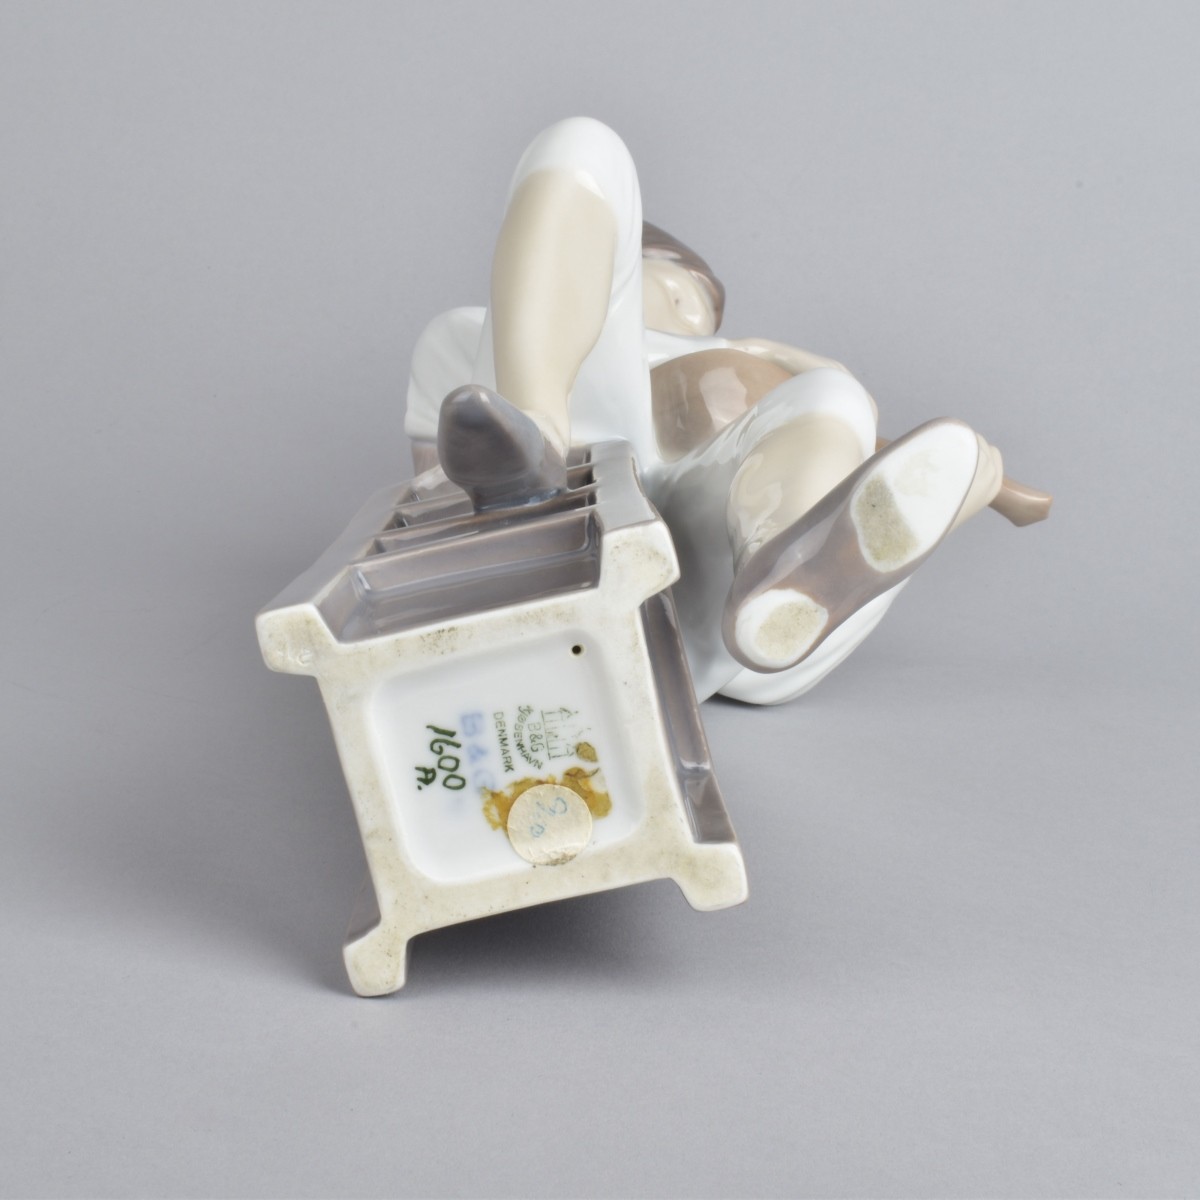 Bing & Grondahl (B&G) Porcelain Figurine